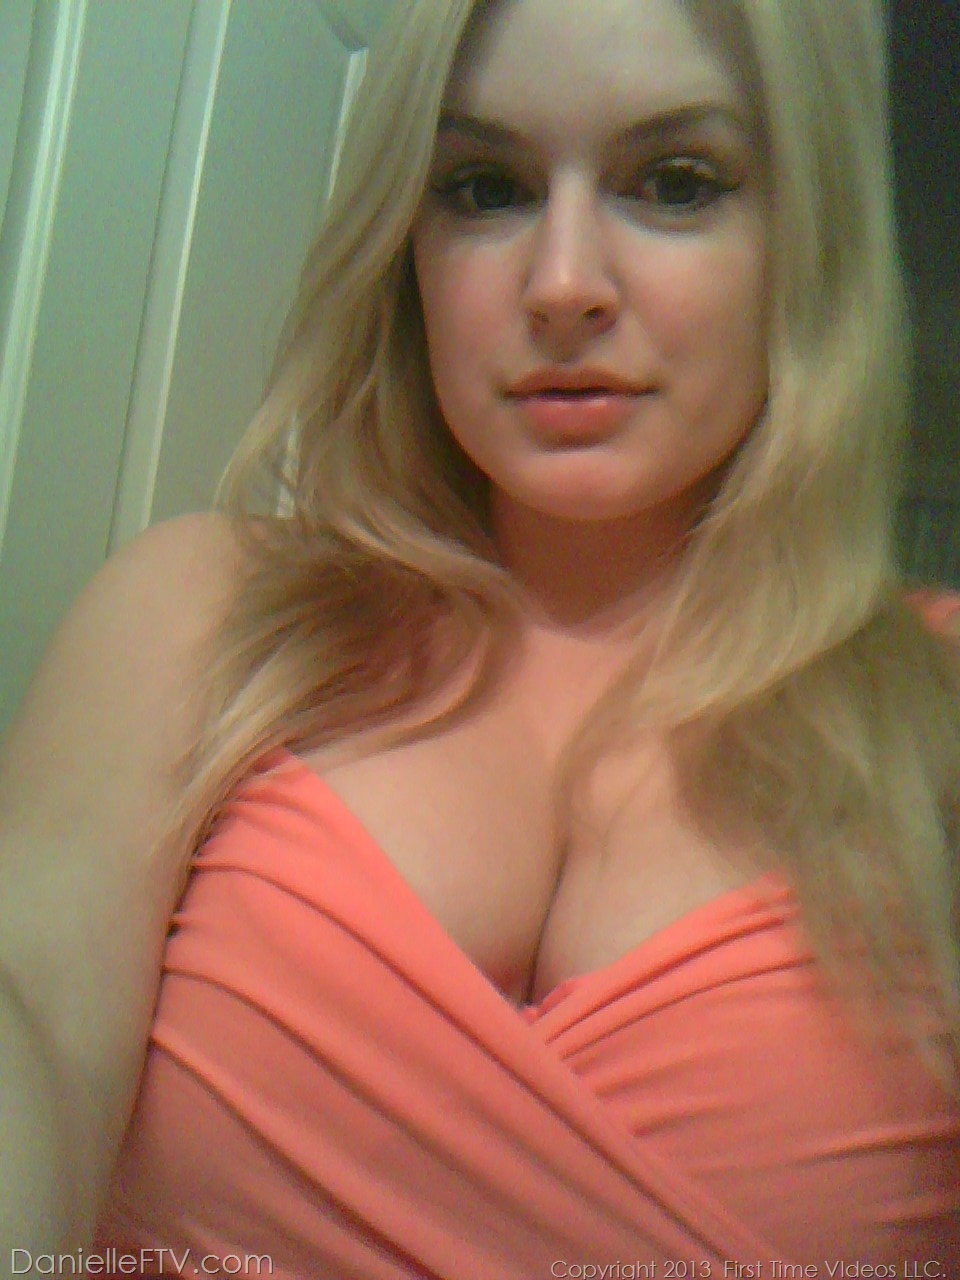 Blonde amateur Danielle Ftv dons numerous outfits for non nude selfies foto porno #422634183